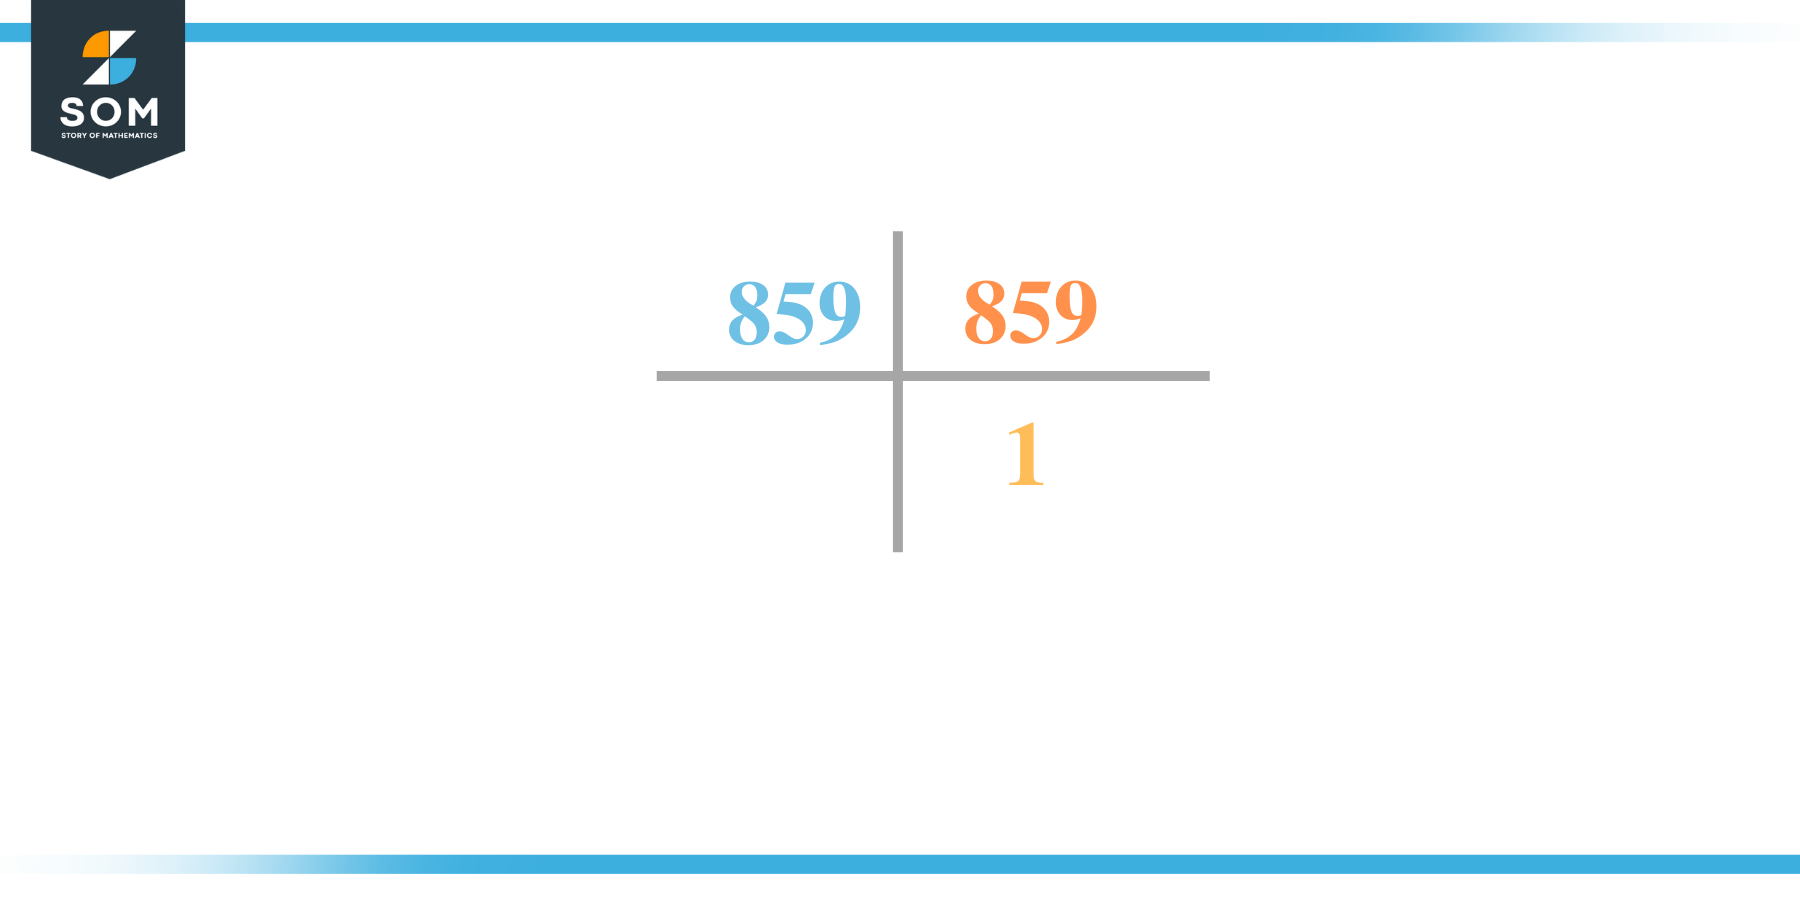 Prime factorization of 859 2